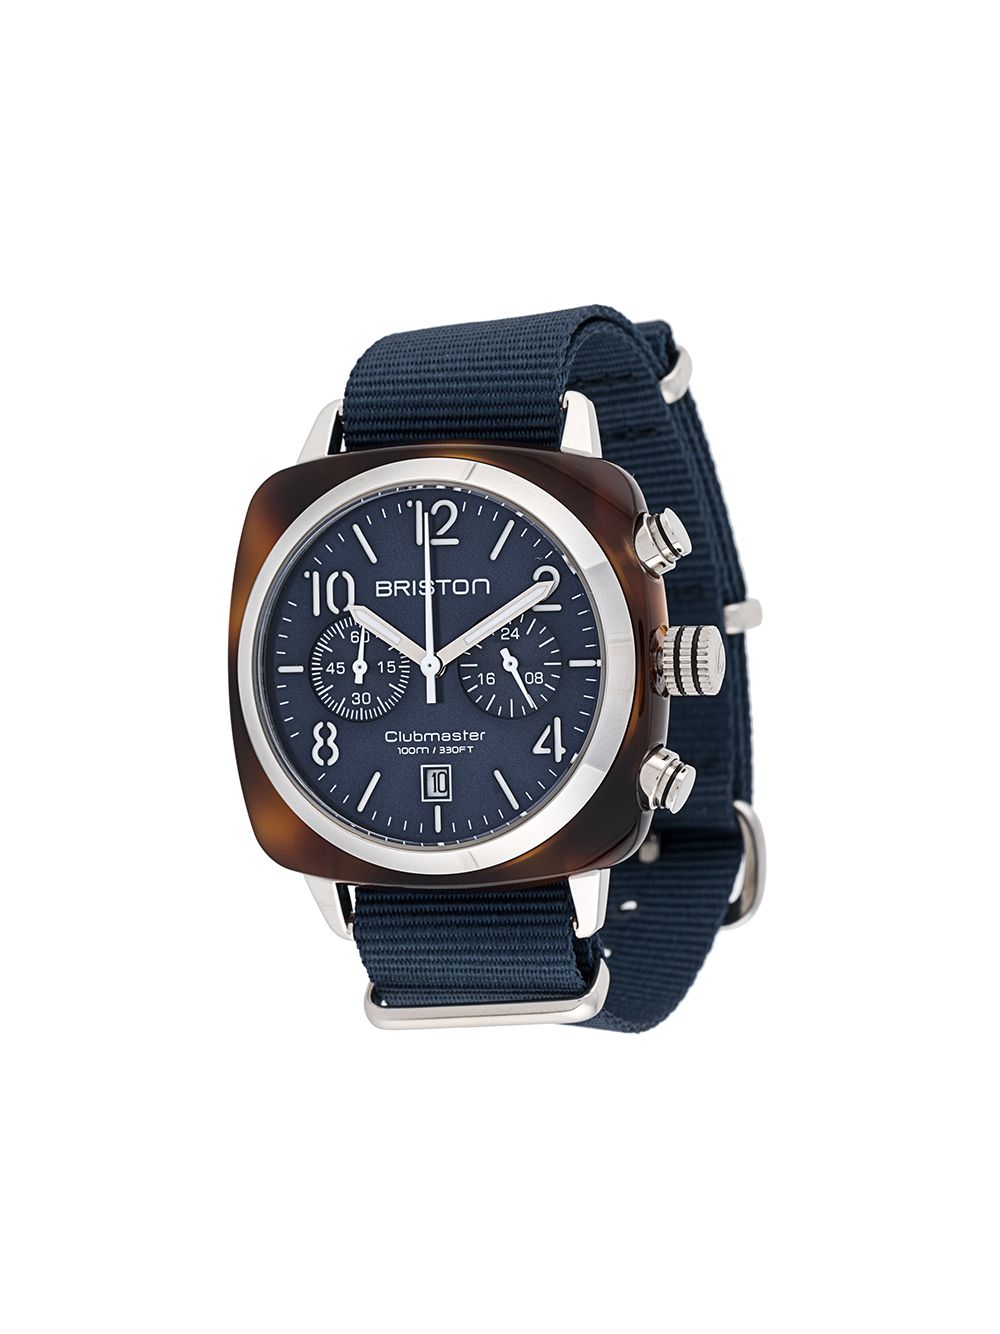 фото Briston watches наручные часы clubmaster classic 40 мм